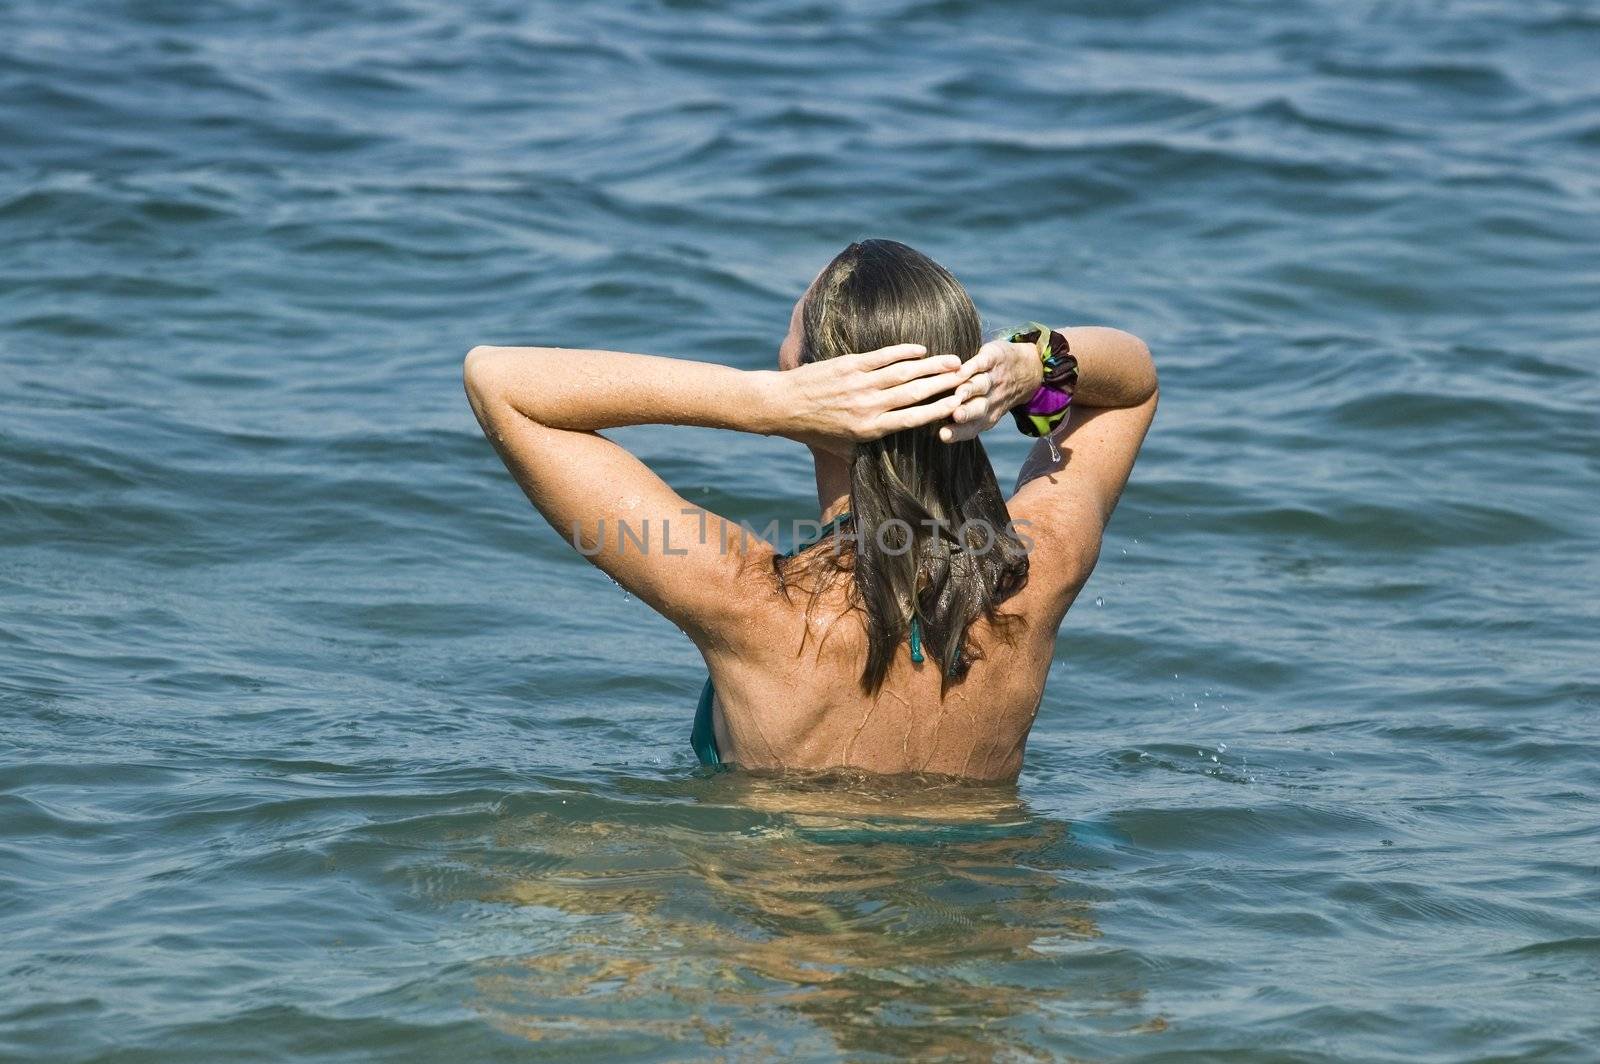 The woman bathes in Black sea